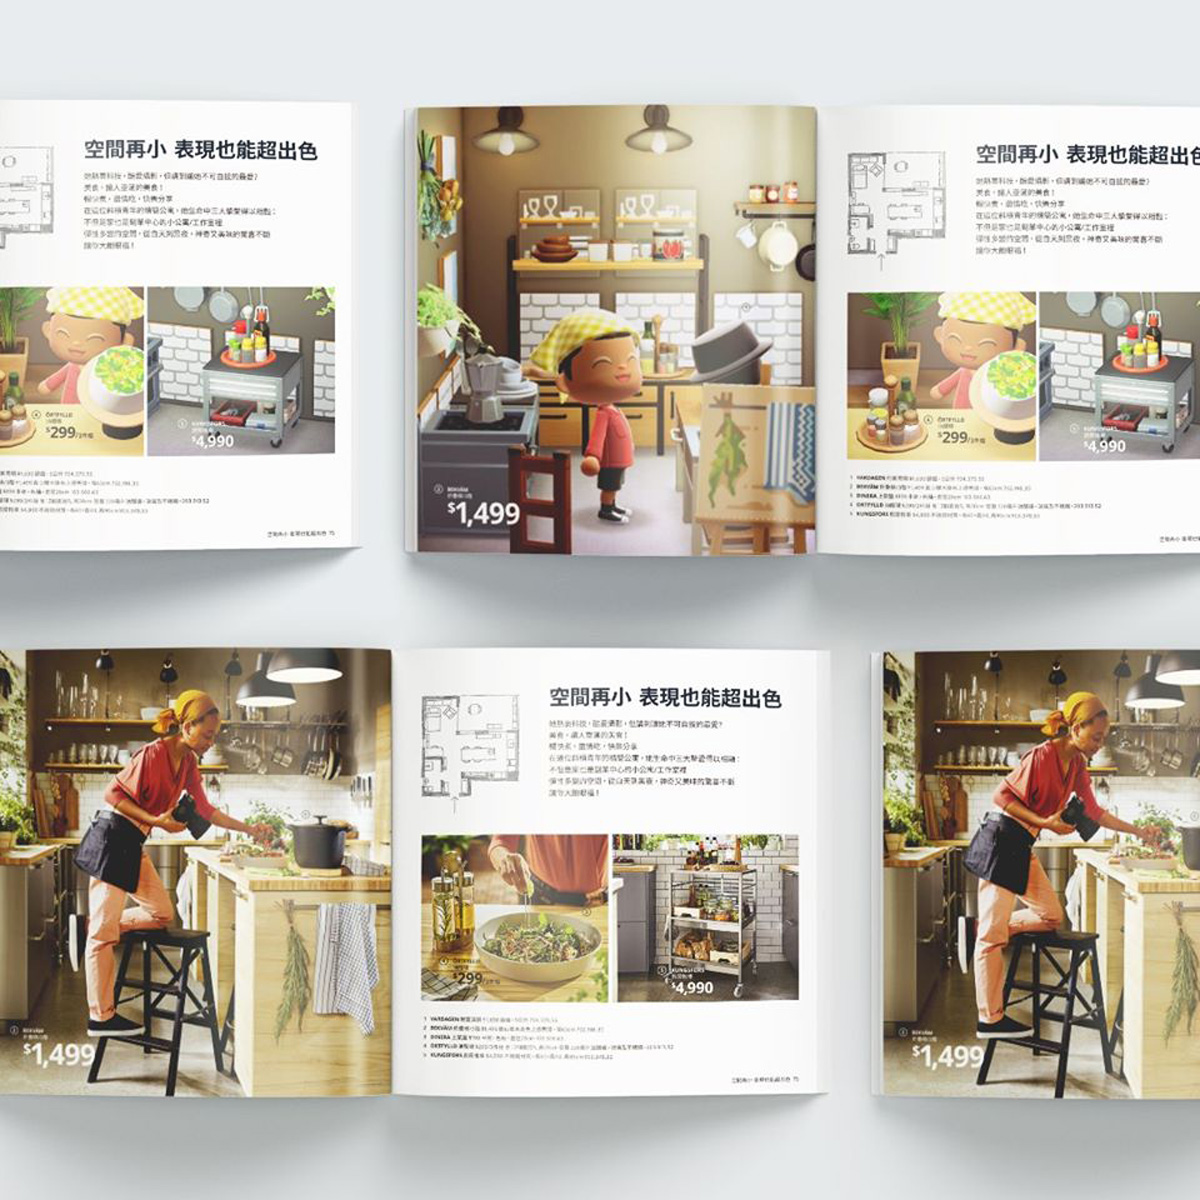 IKEA Taiwan 2021 Catalogue Animal Crossing